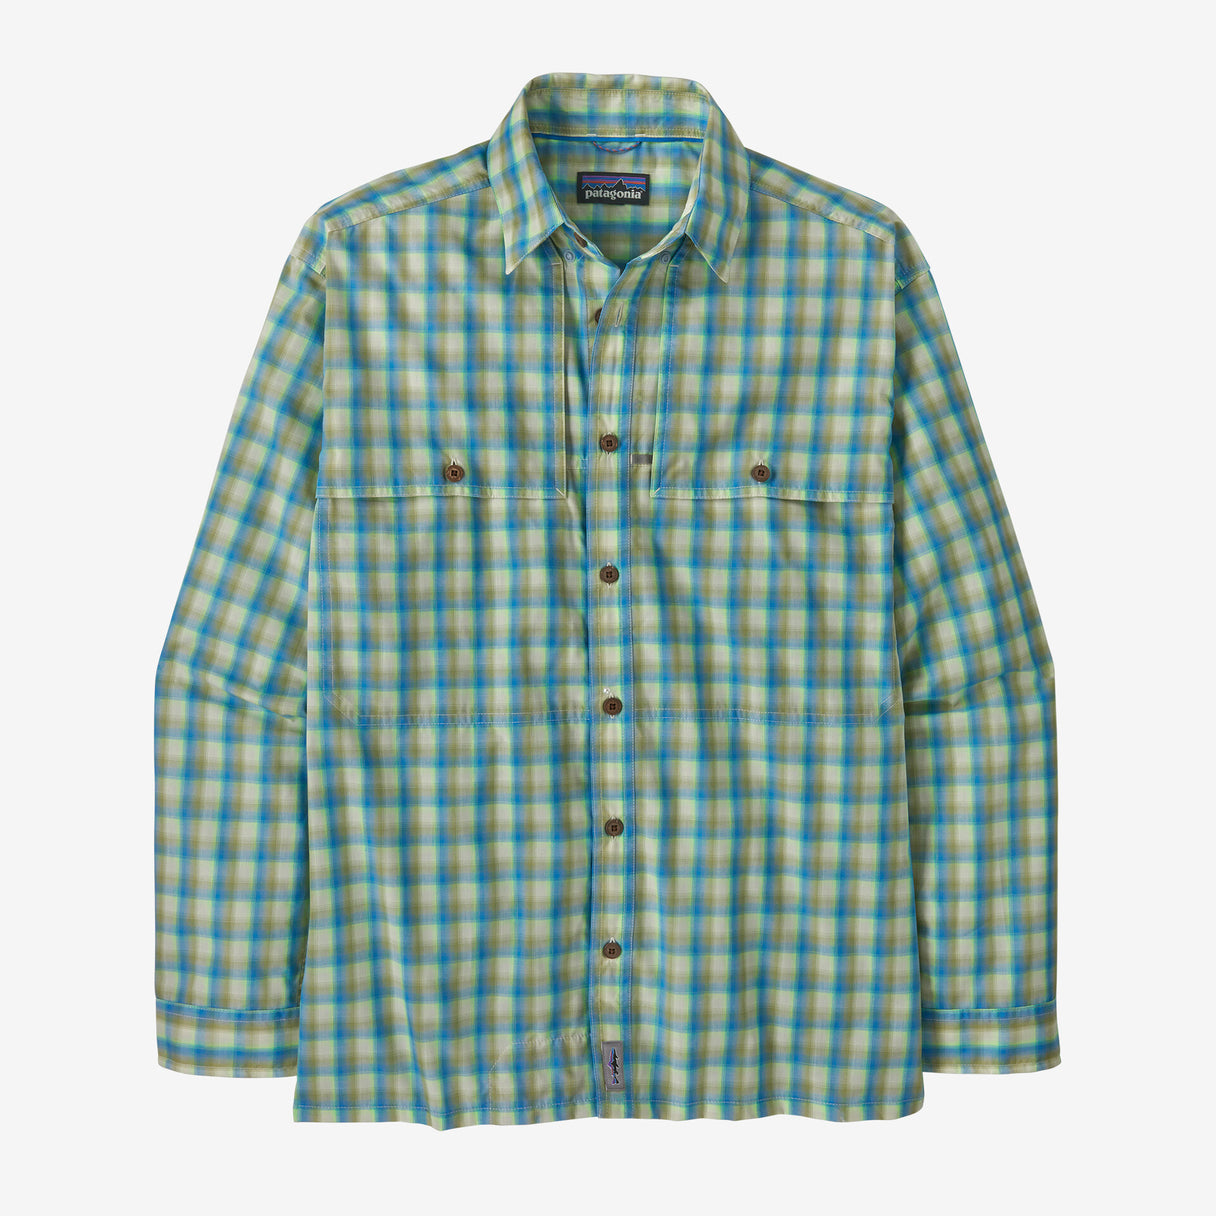 Patagonia Men's Island Hopper Shirt Long Sleeve Mirrored: Vessel Blue / L